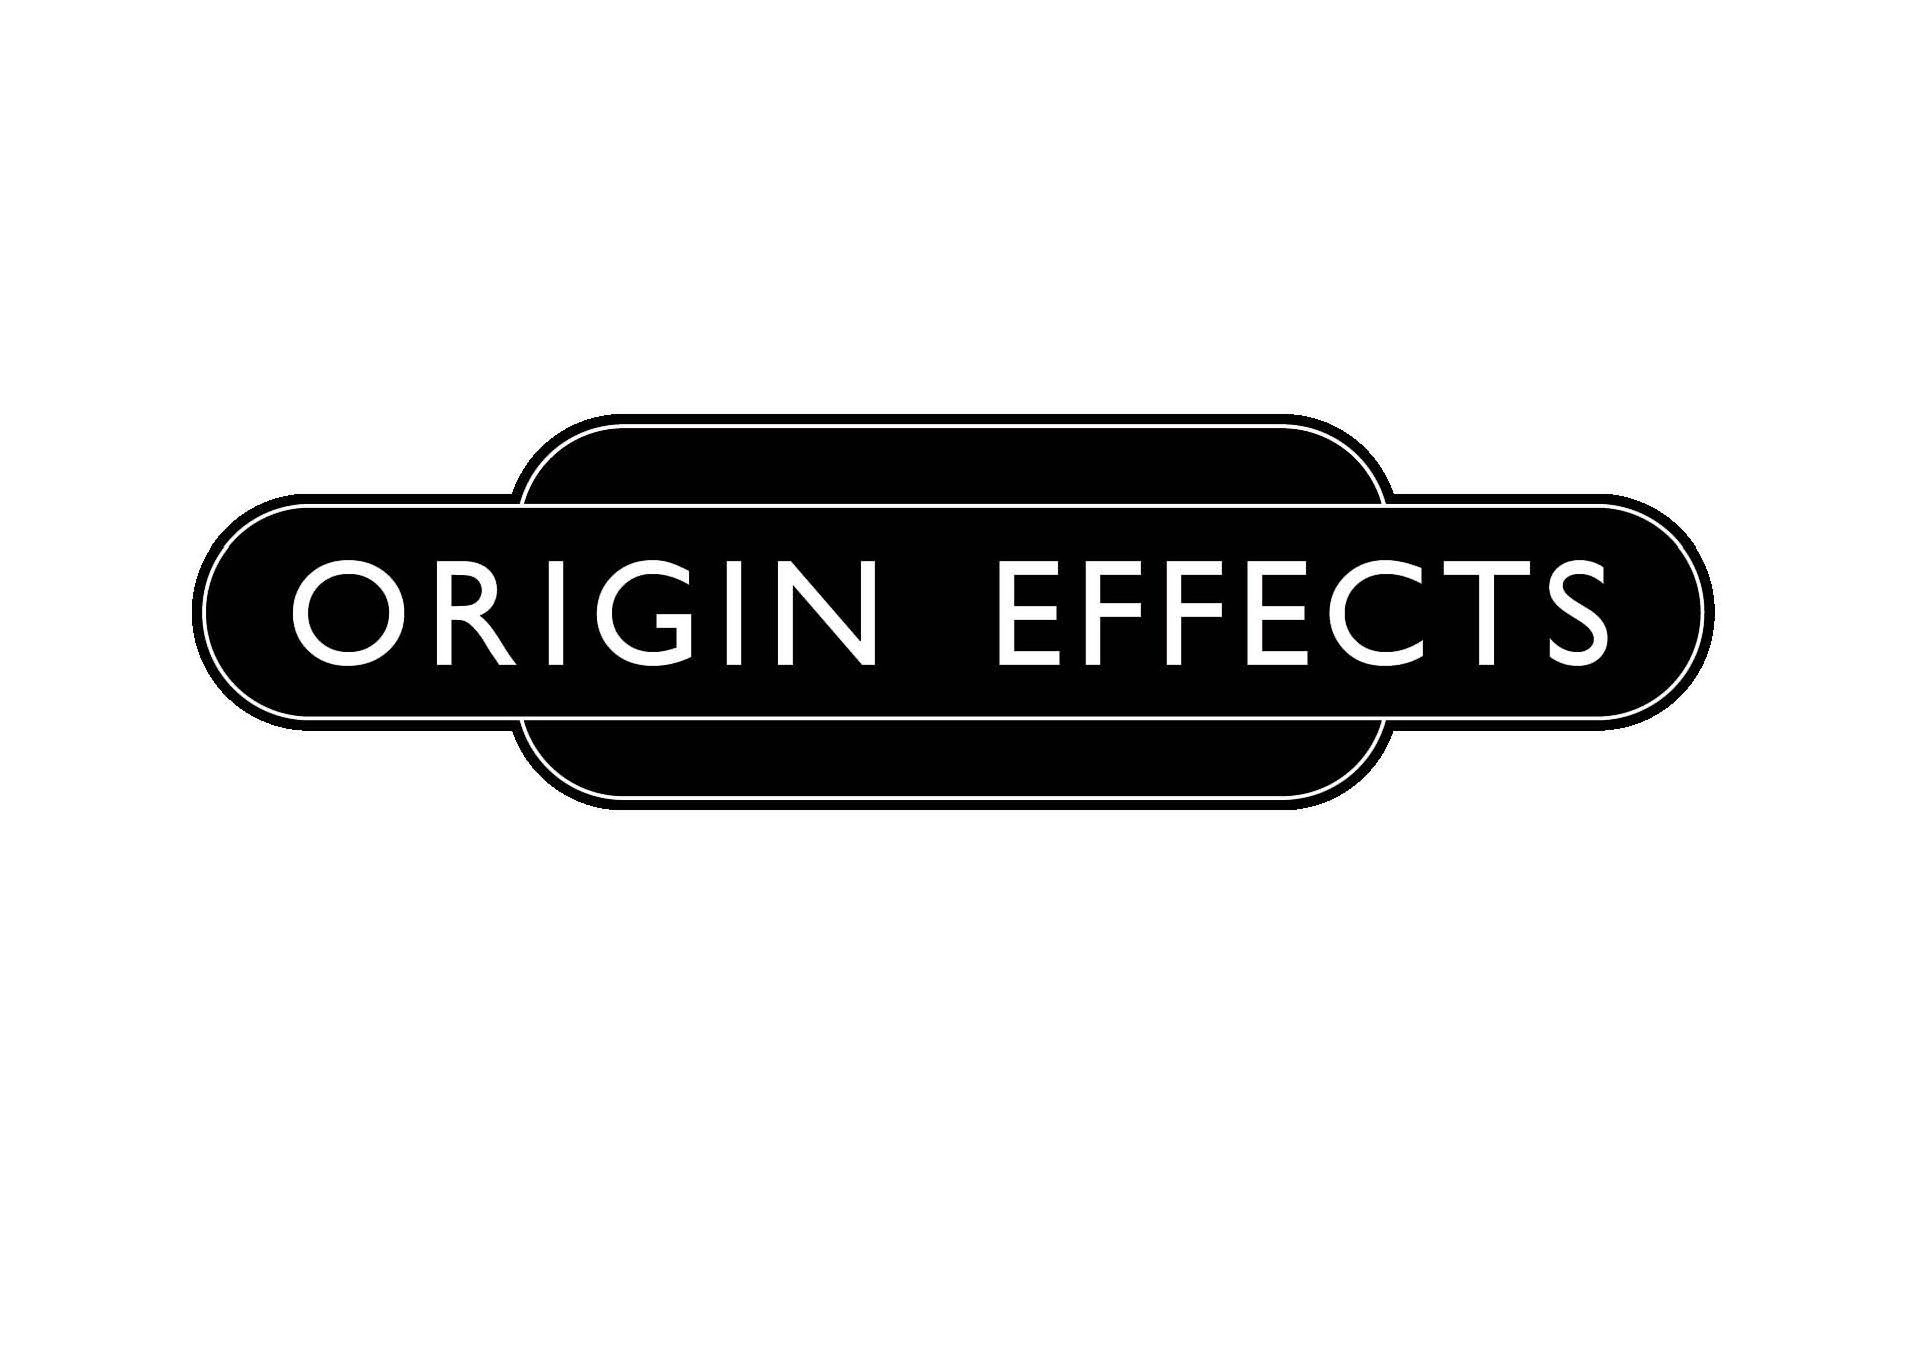  ORIGIN EFFECTS